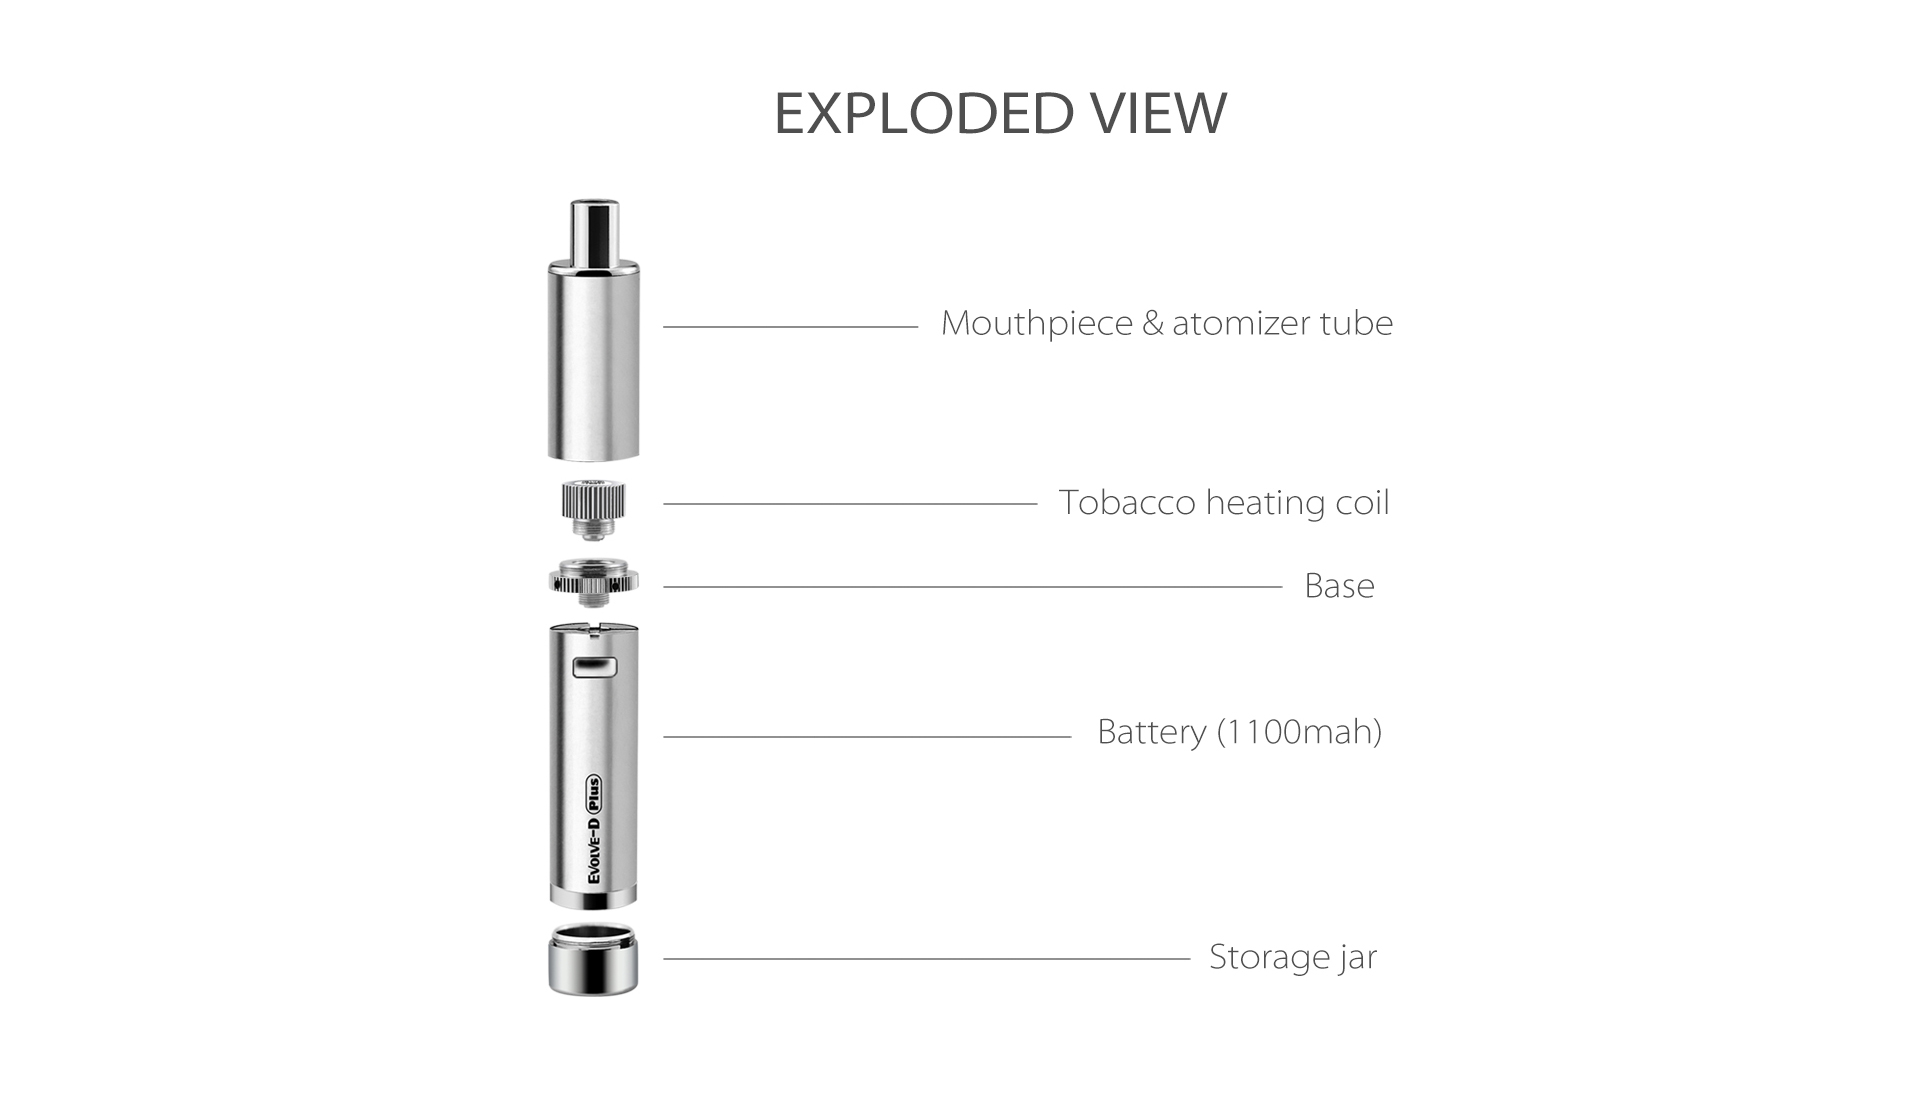 Yocan Evolve-D Plus vaporizer pen 2020 version exploded view.